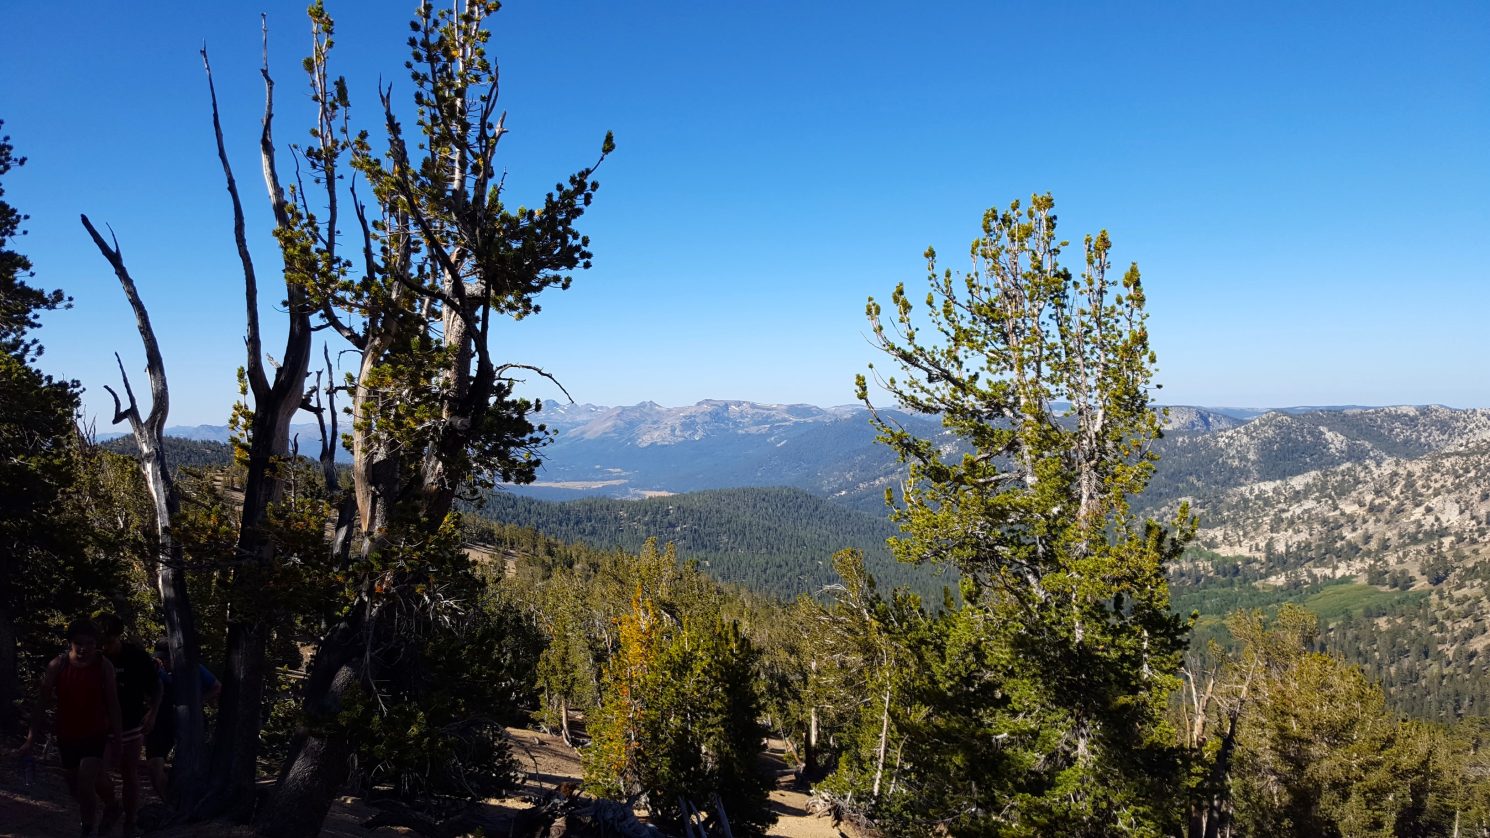 Views from Freel - Jobs Peak trail